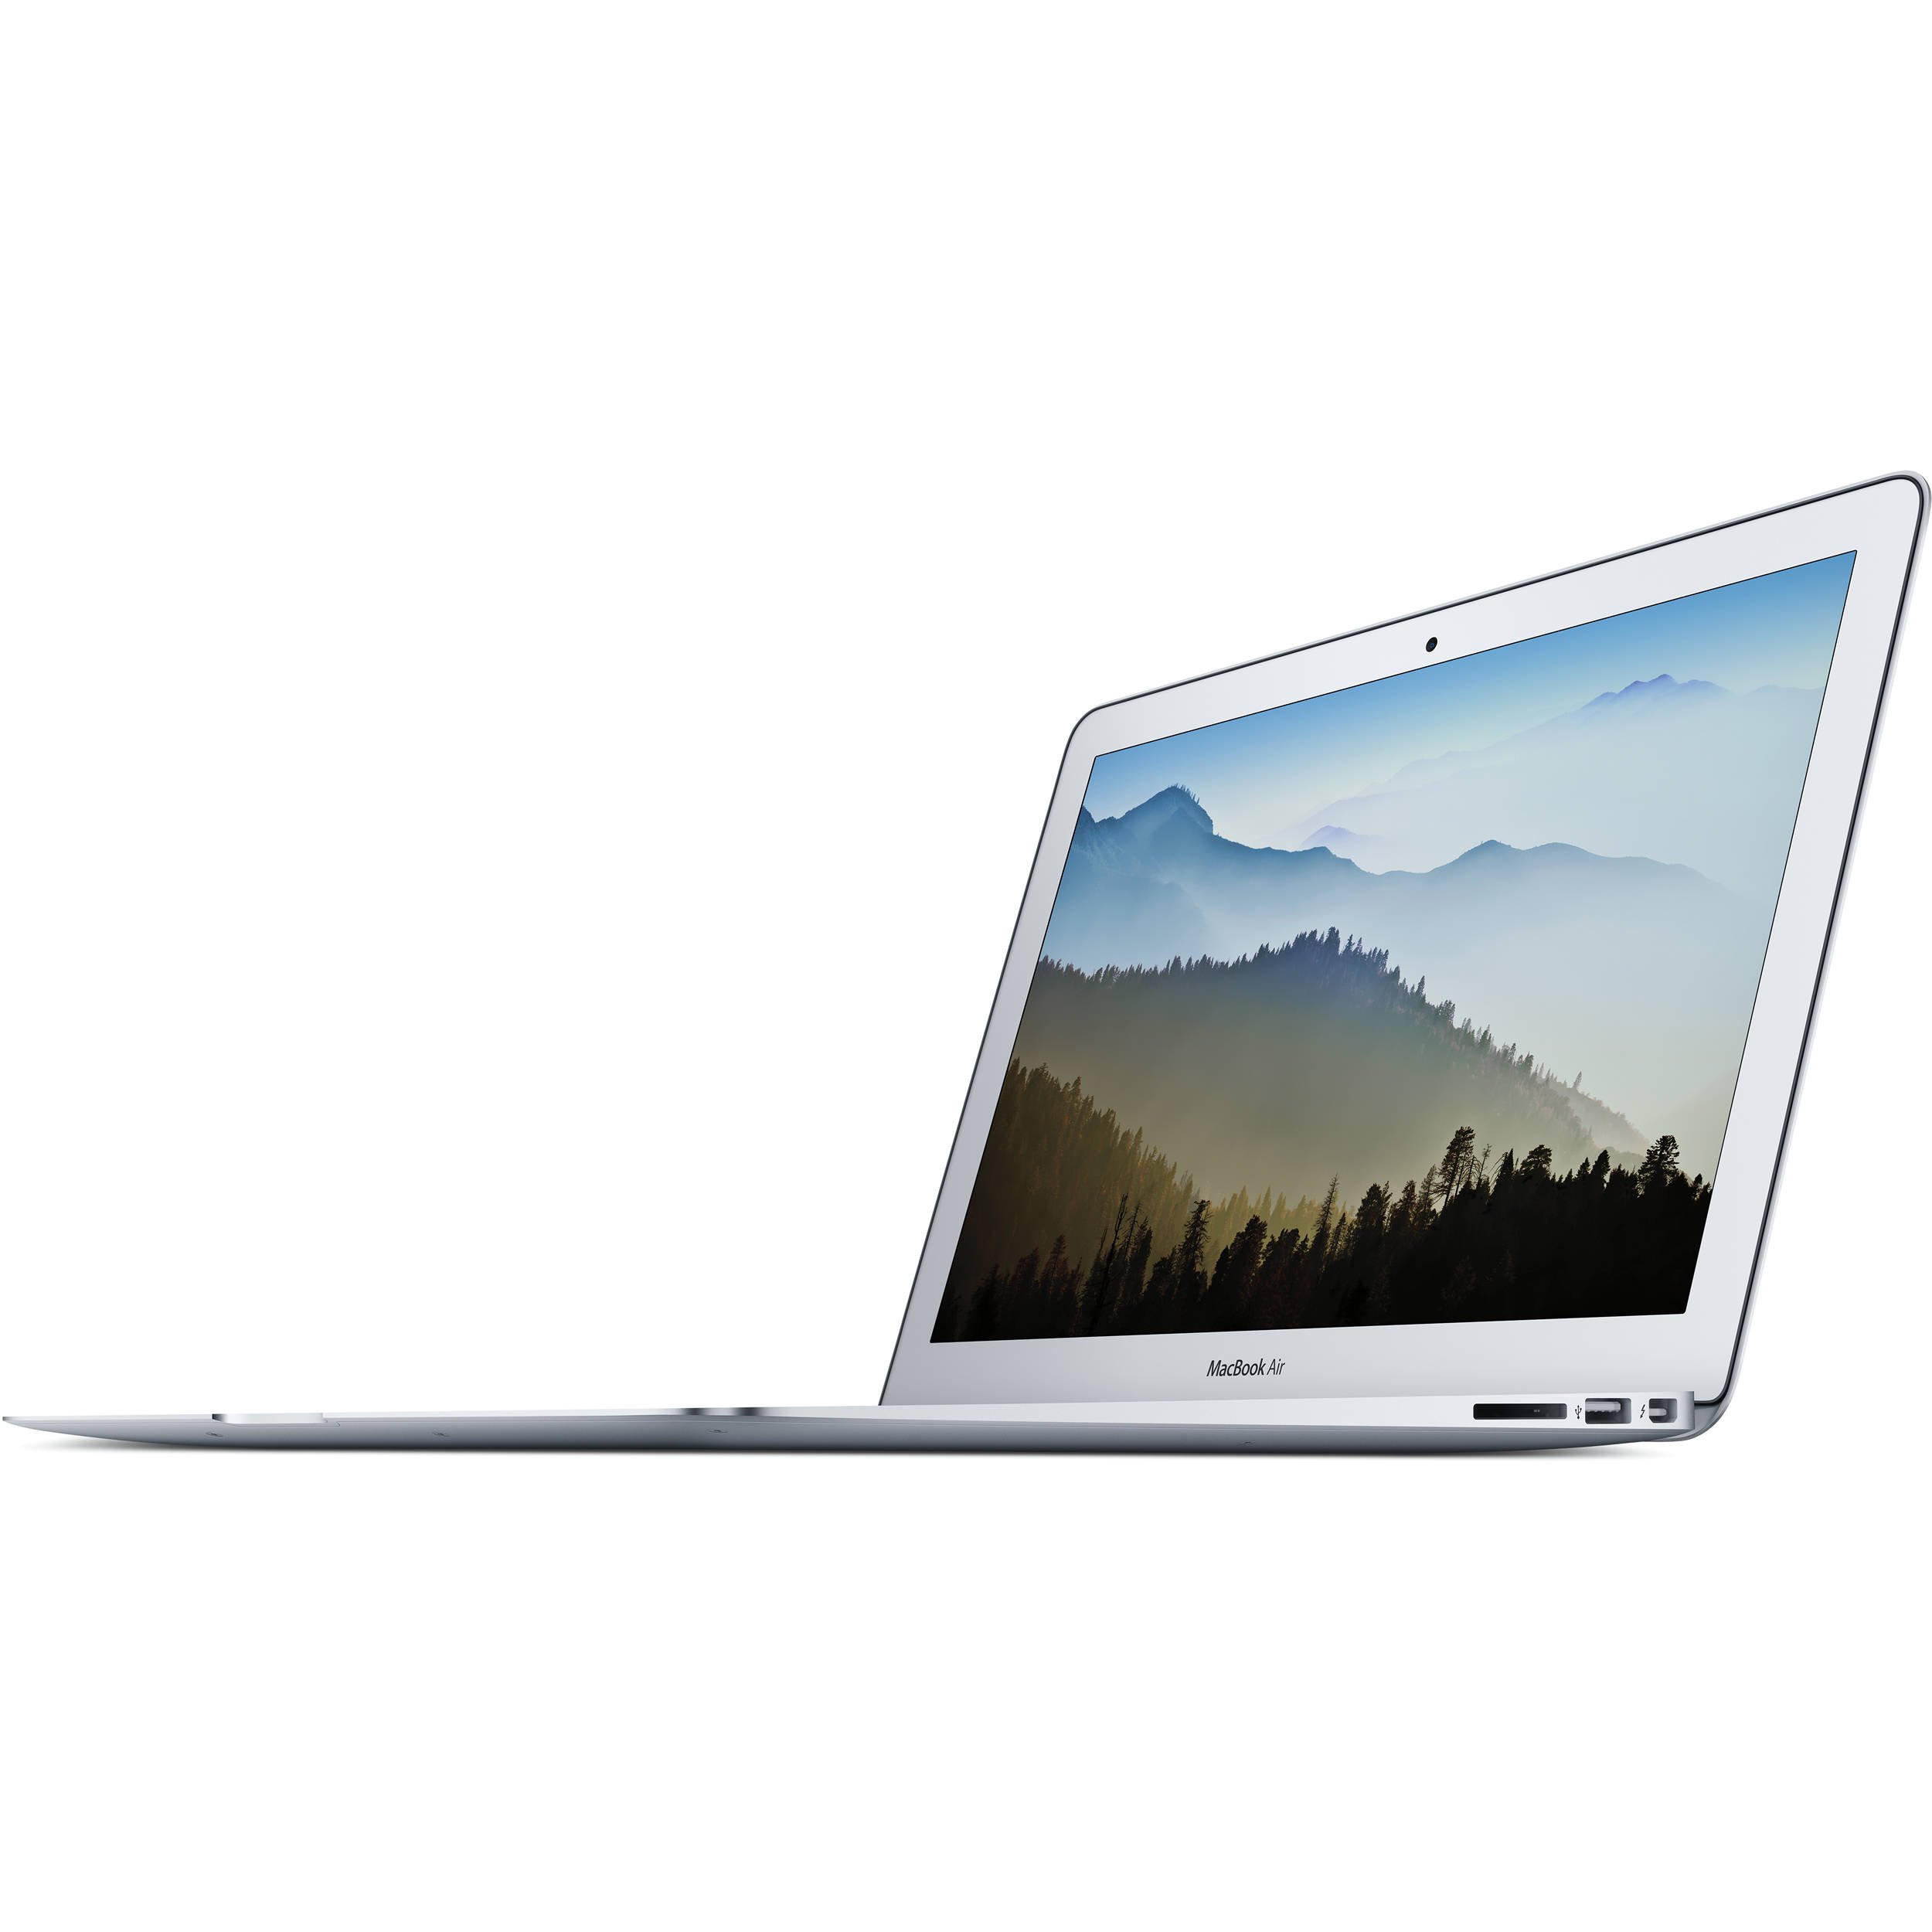 Apple 13 inches MacBook Air, 1.8GHz Intel Core i5 Dual Core Processor, 8GB RAM, 128GB SSD, Mac OS, Silver, MQD32LL/A (Renewed)